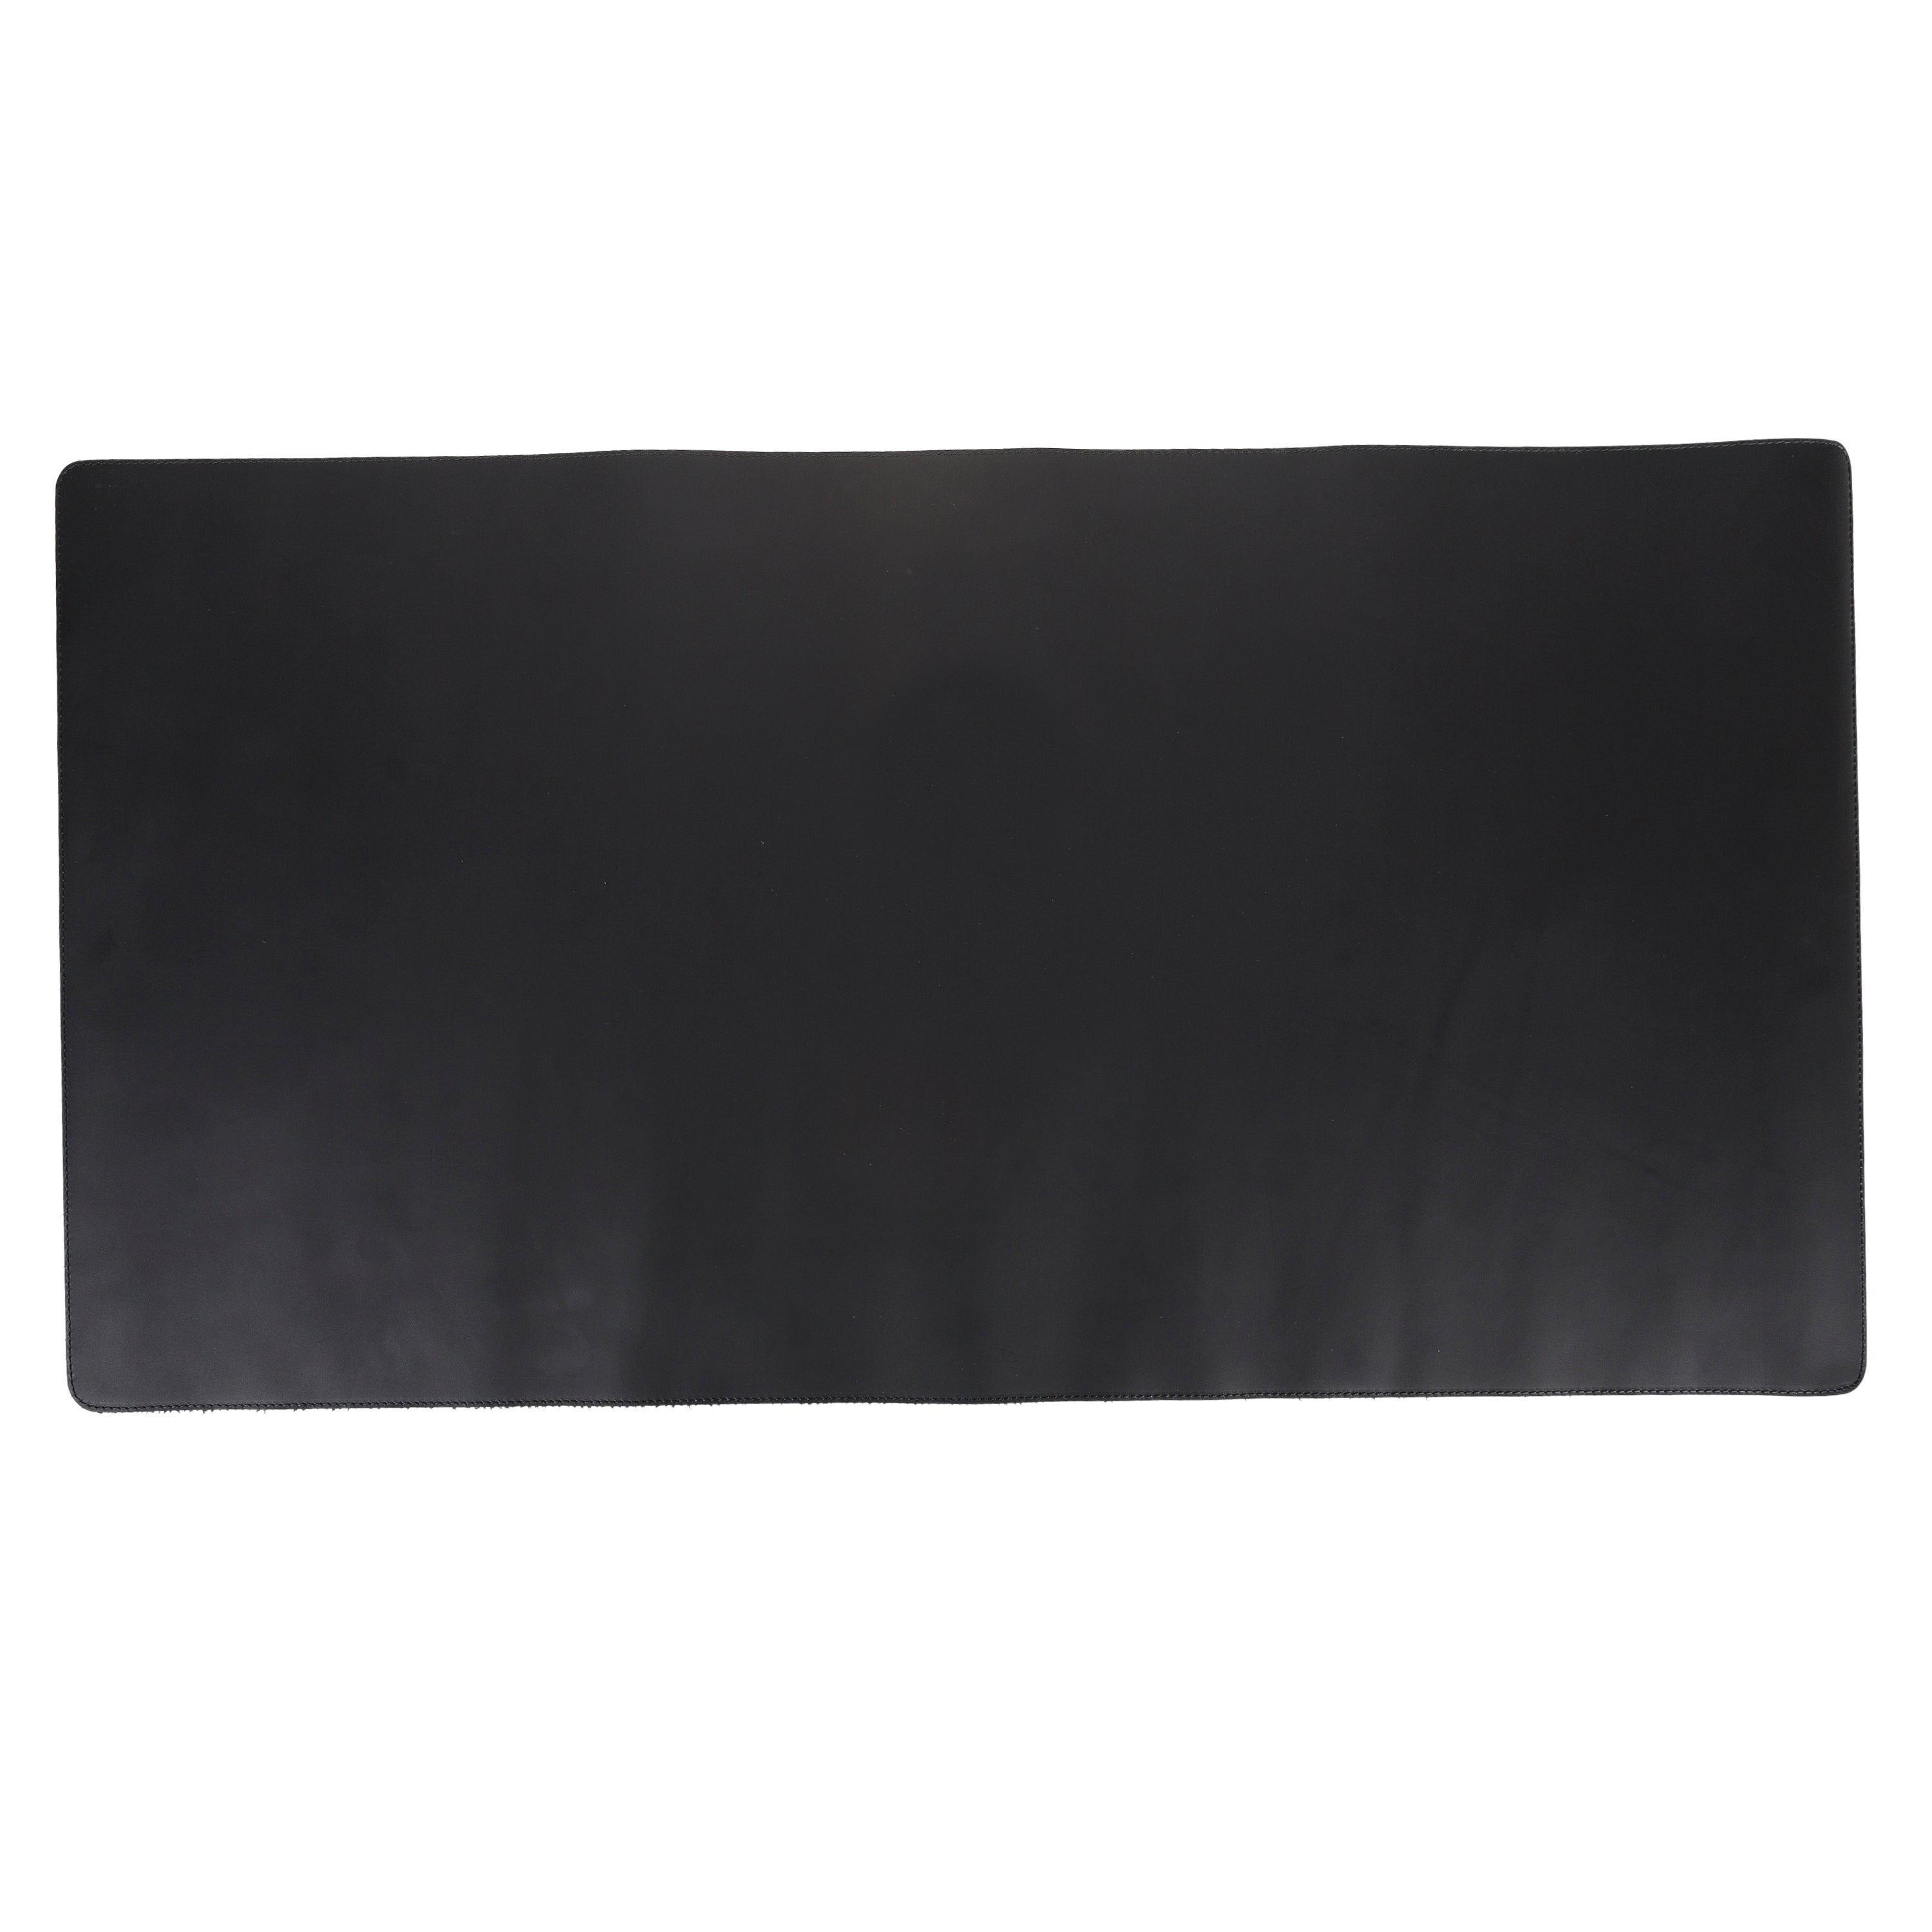 DelfiCase Genuine Matte Black Leather Deskmat, Computer Pad, Office Desk Pad 4